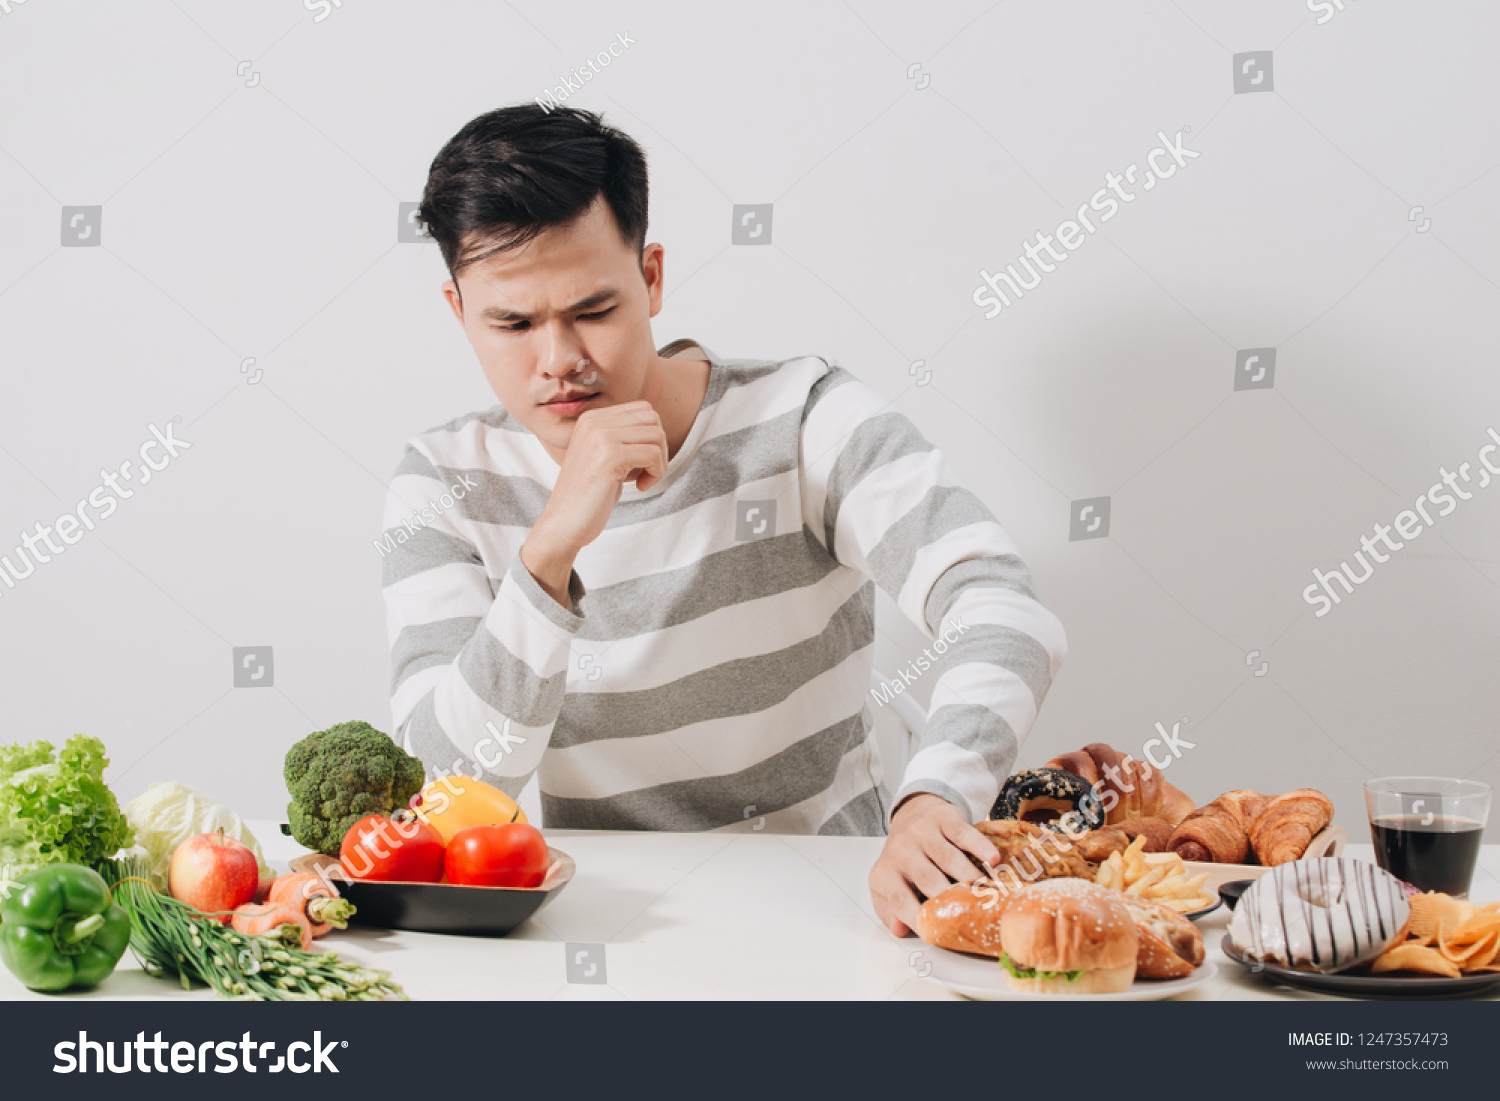 Man having hard choice between healthy and unhealthy food #1247357473